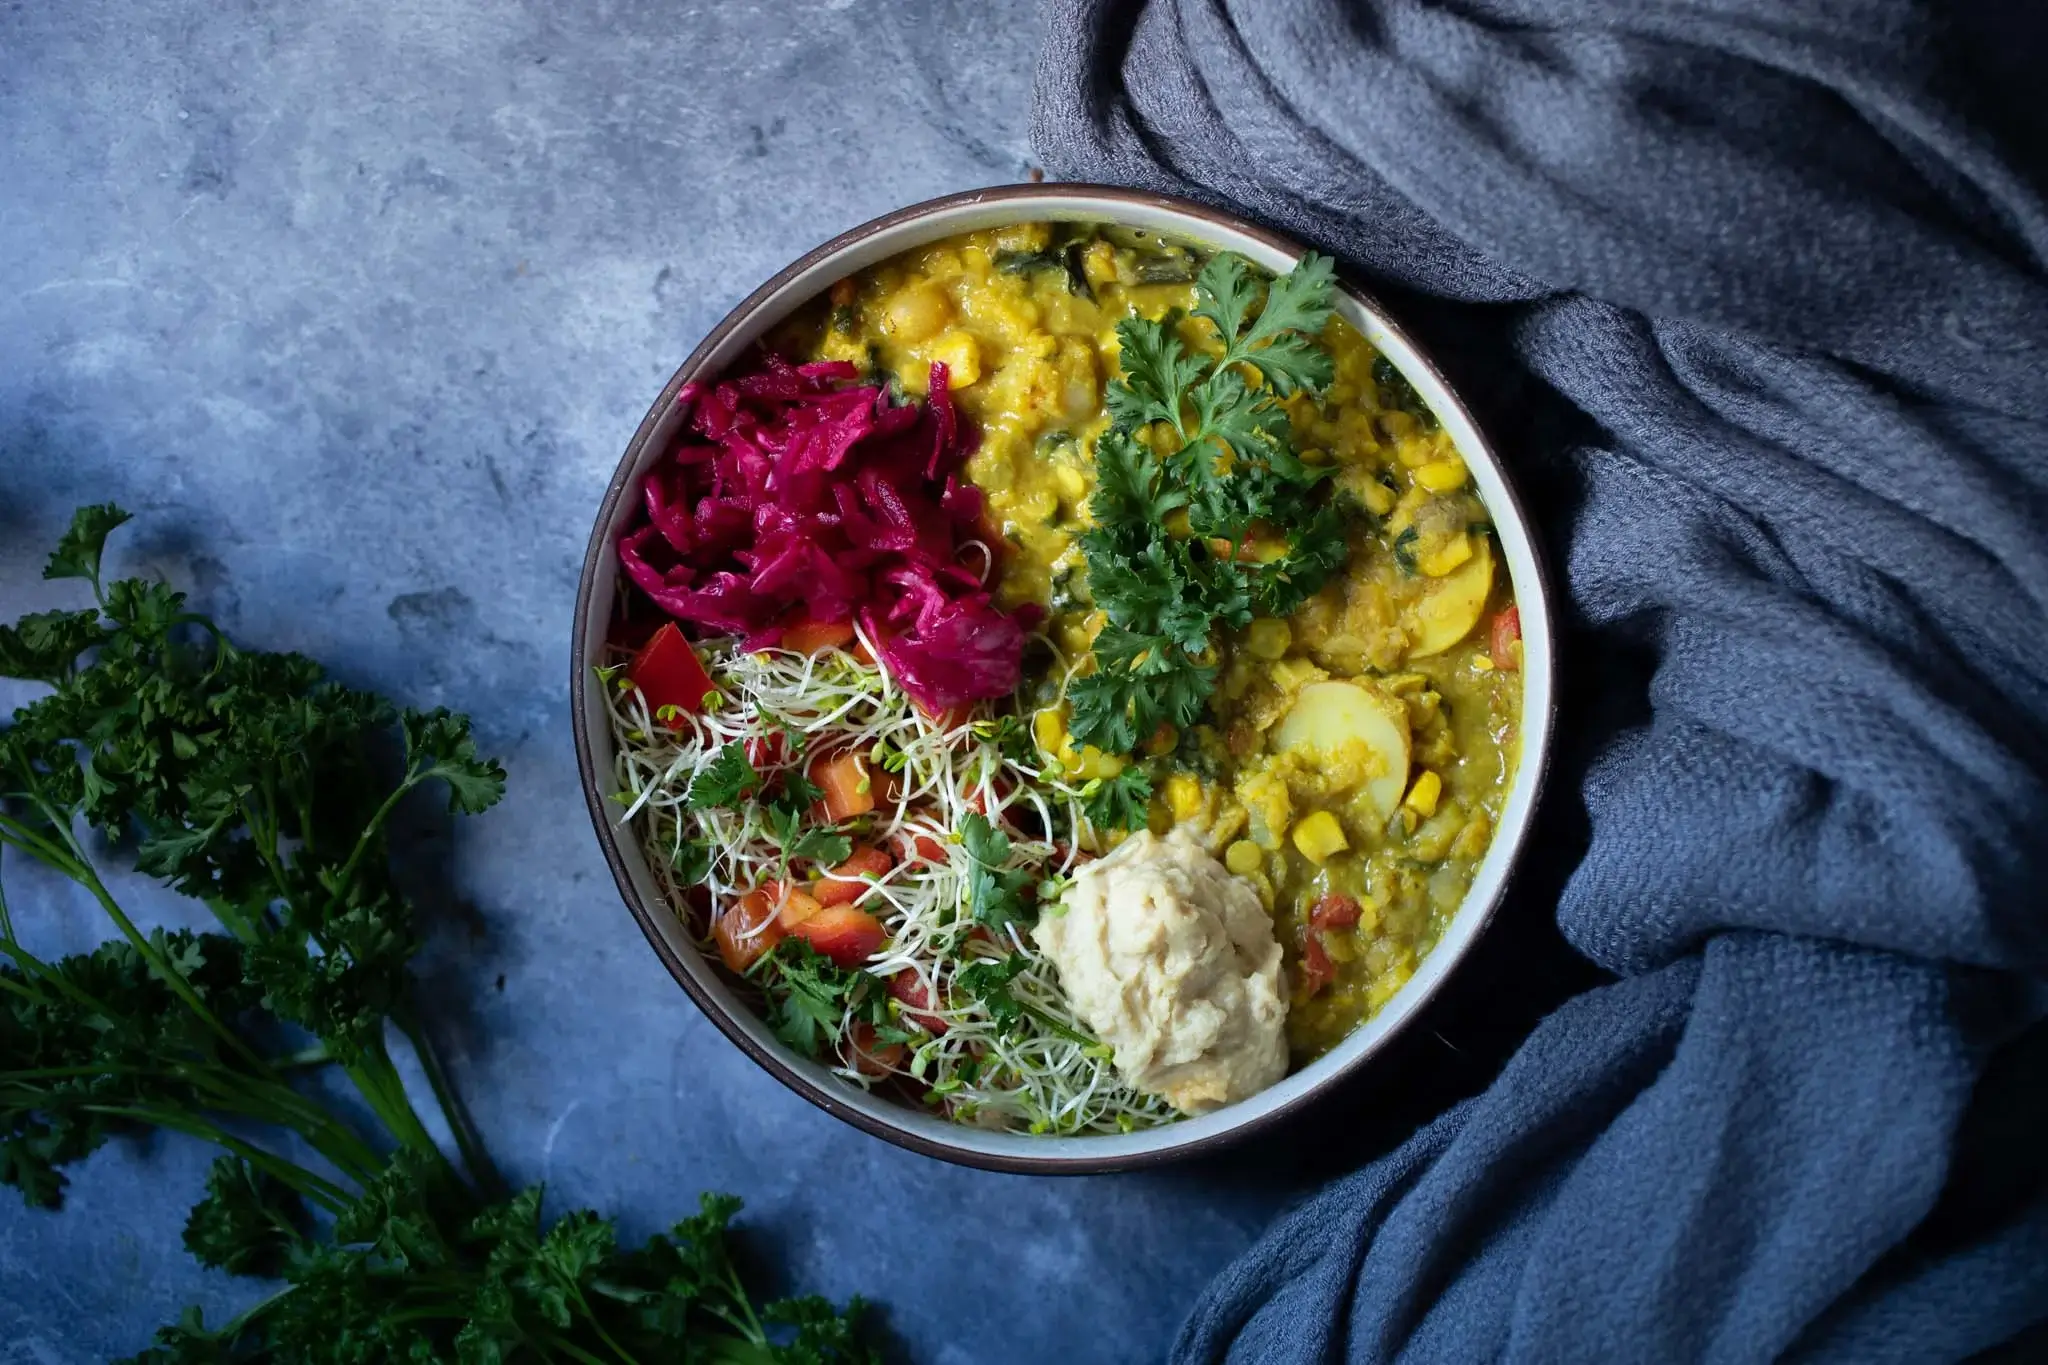 a bowl of golden lentils with purple sauerkraut on a blue table